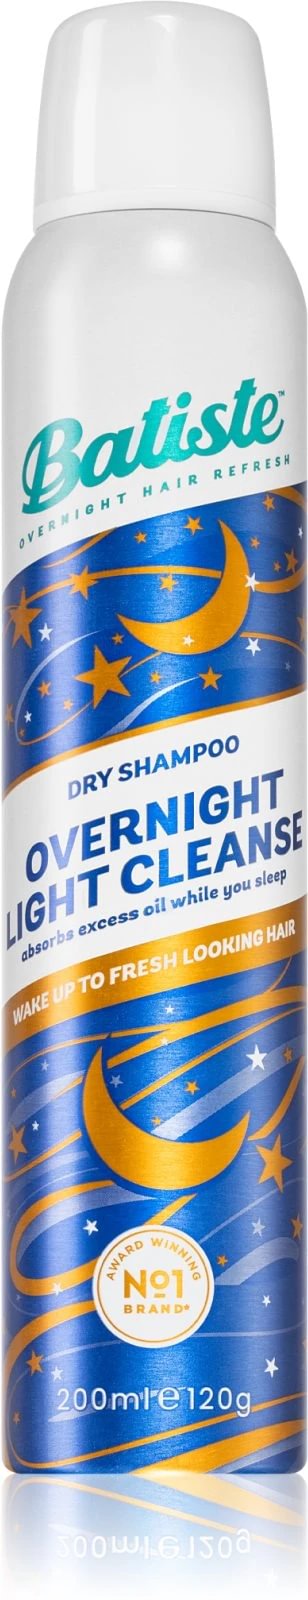 Batiste Overnight Light dry shampoo 200ml